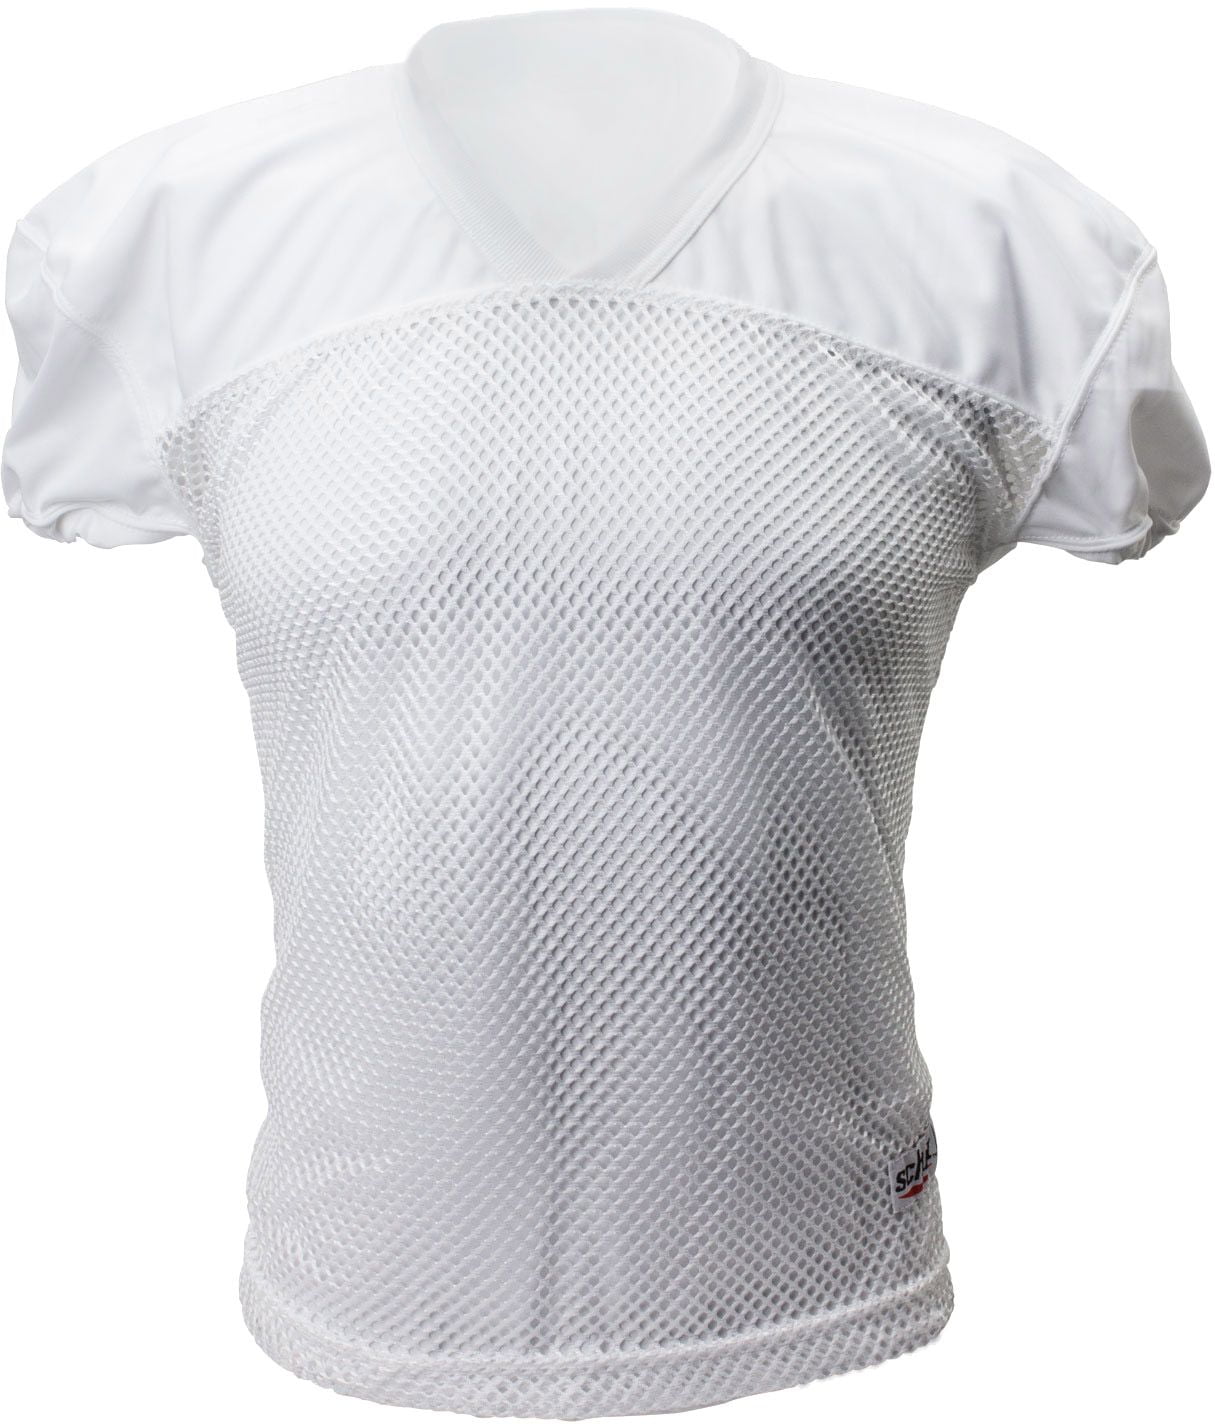 white football jersey